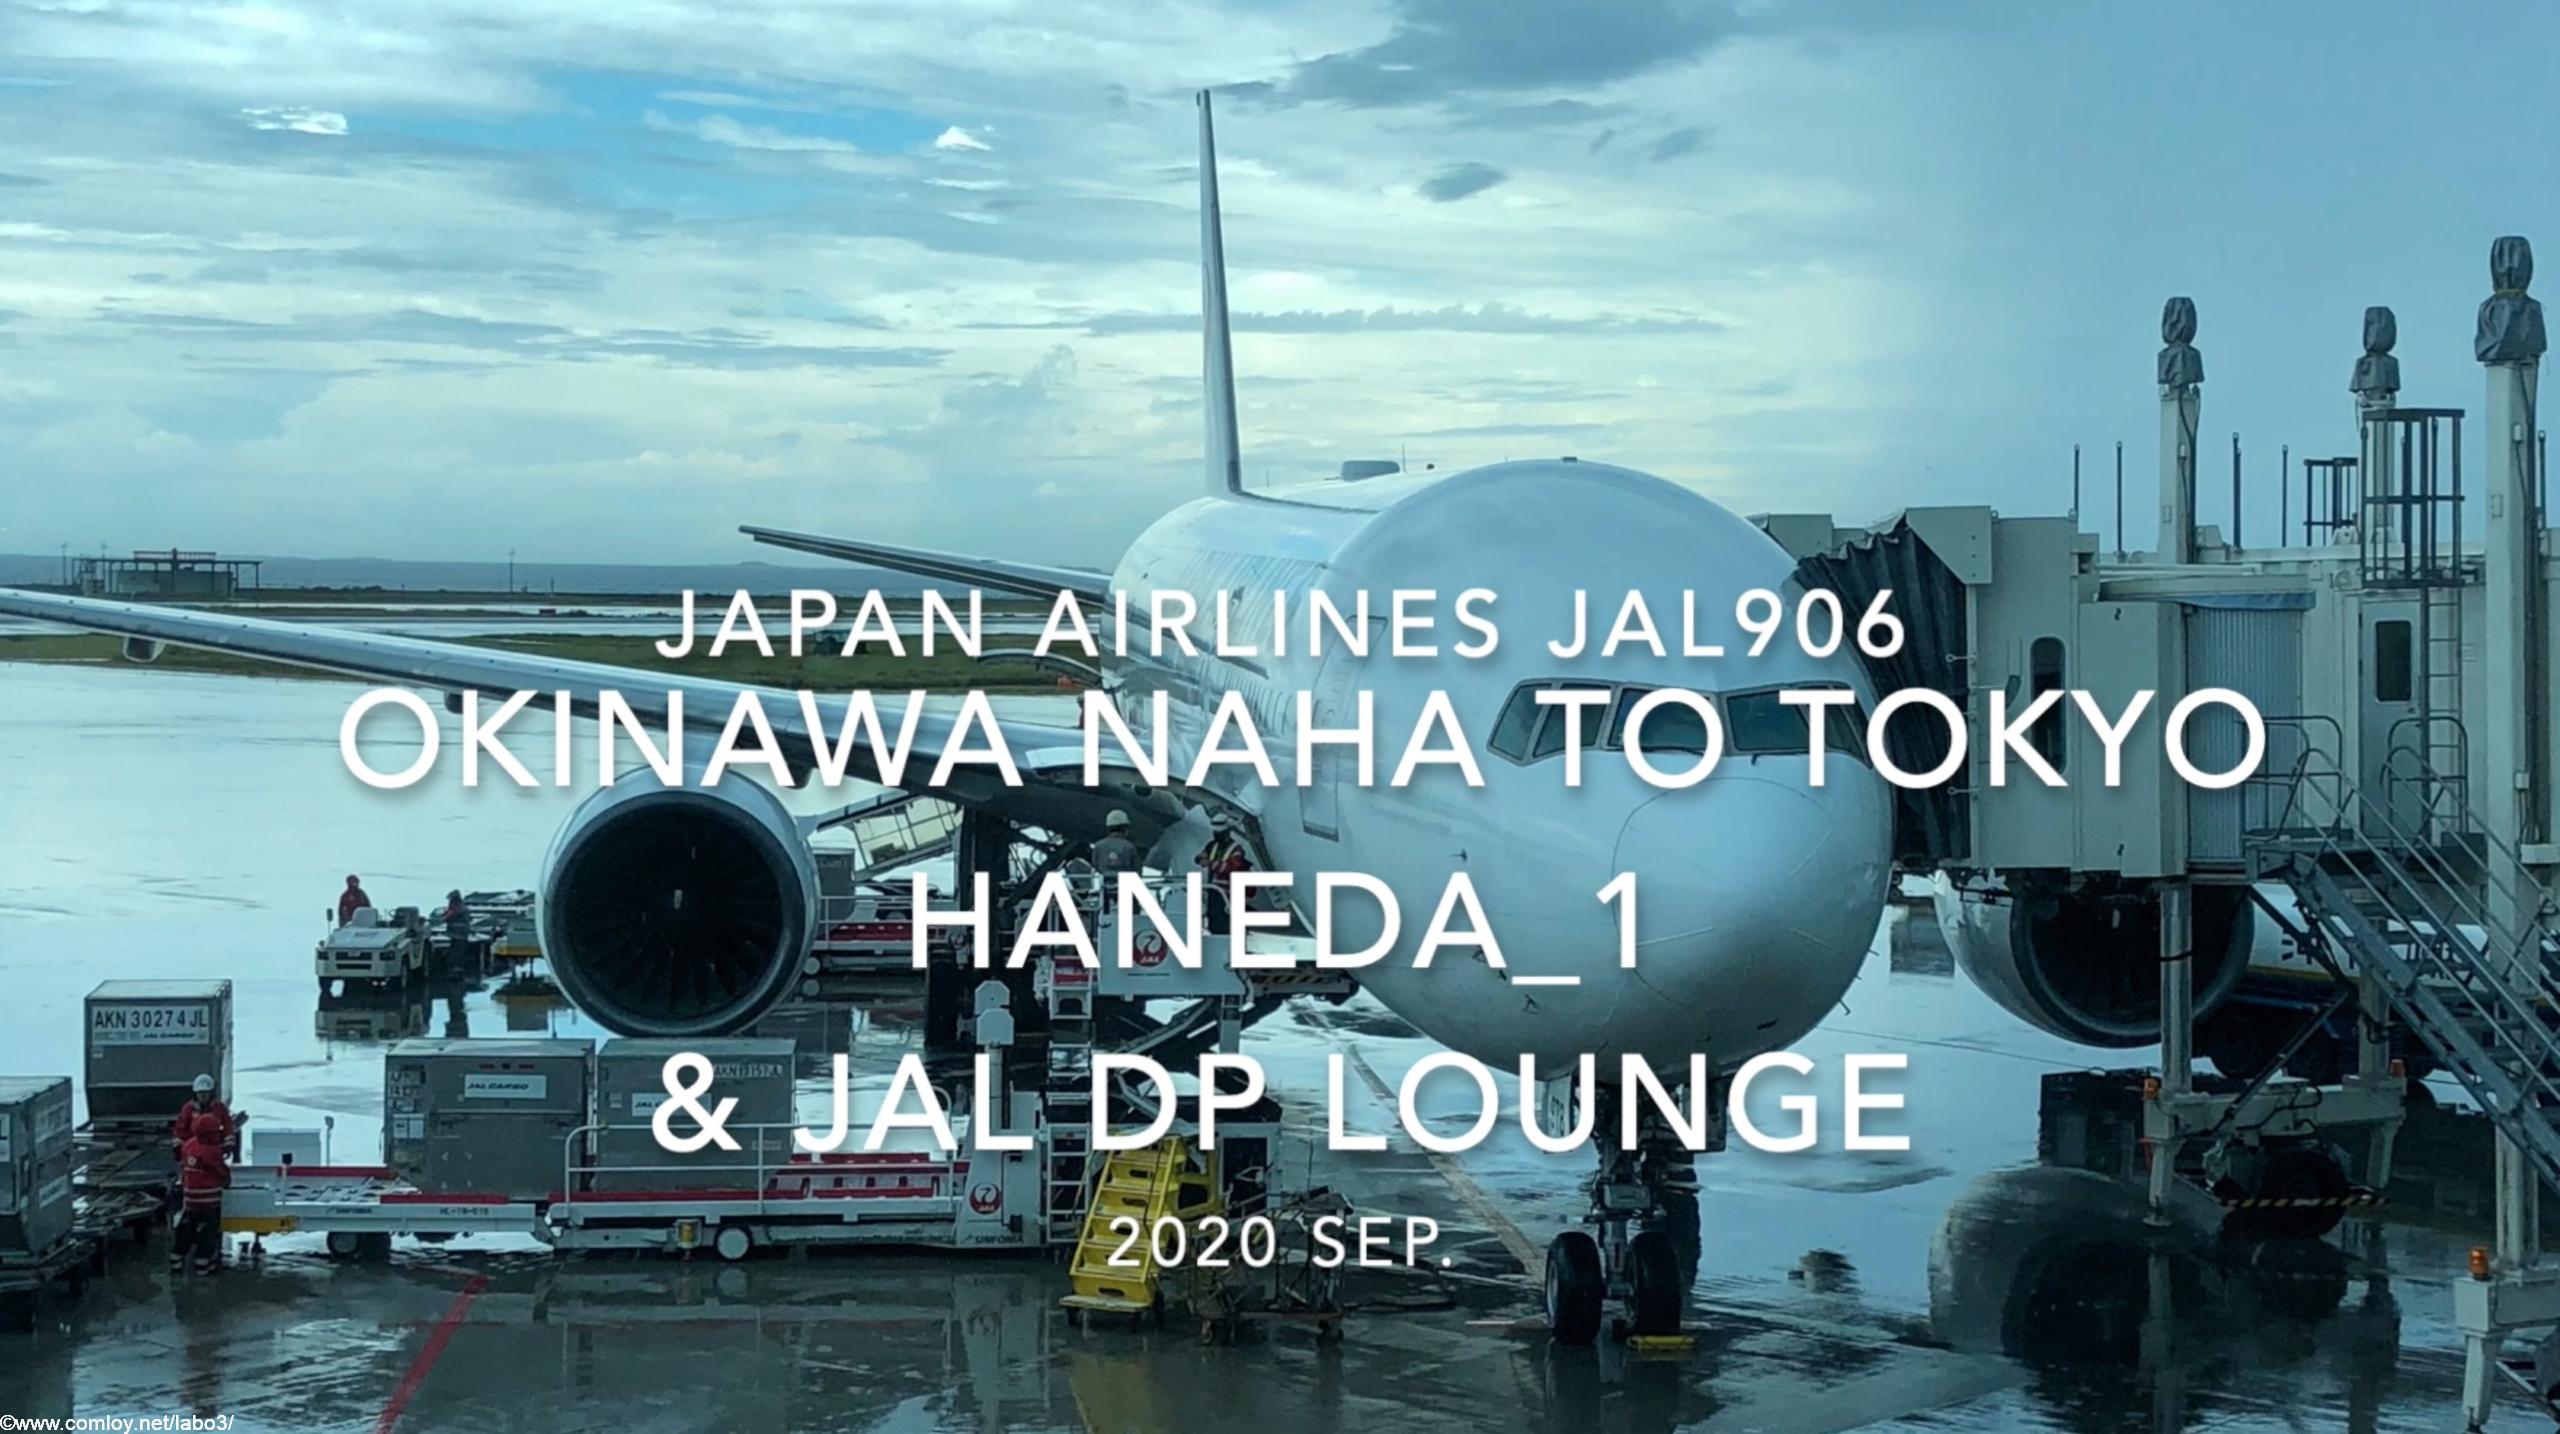 【Flight Report】2020 Sep Japan Airlines JAL906 OKINAWA NAHA TO HANEDA_1 日本航空 那覇 - 羽田 搭乗記